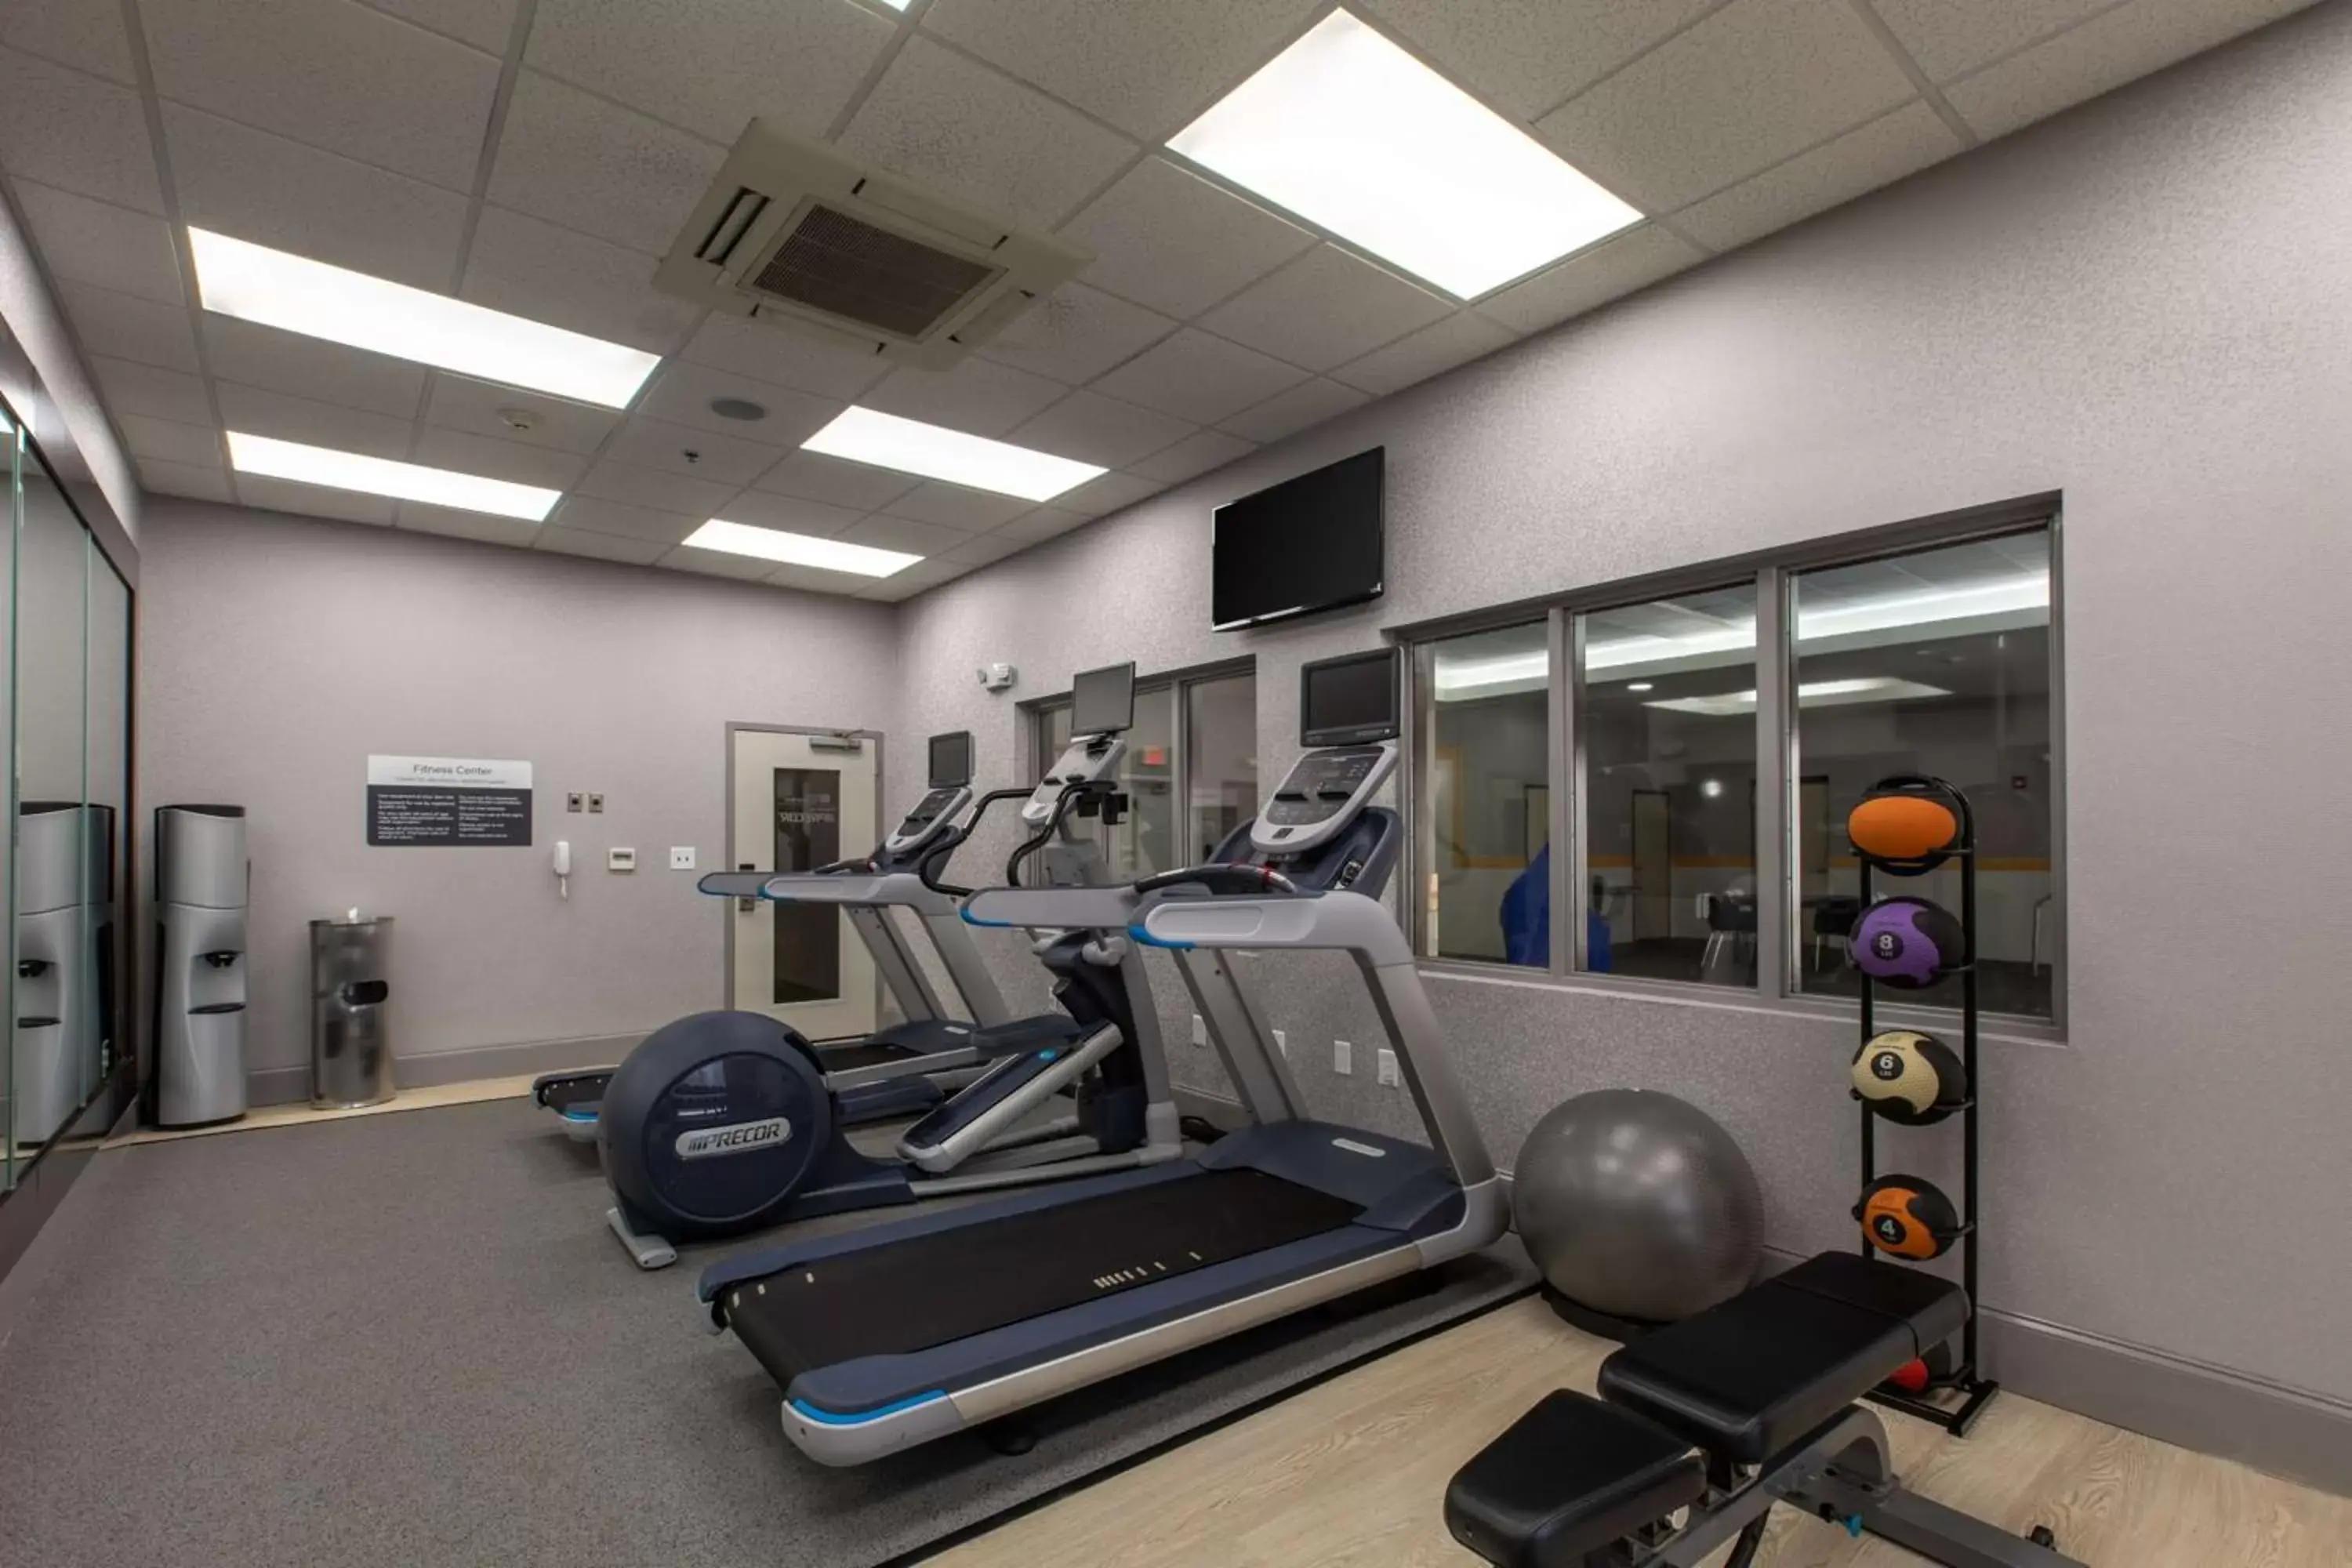 Fitness centre/facilities, Fitness Center/Facilities in Hilton Garden Inn Lynchburg